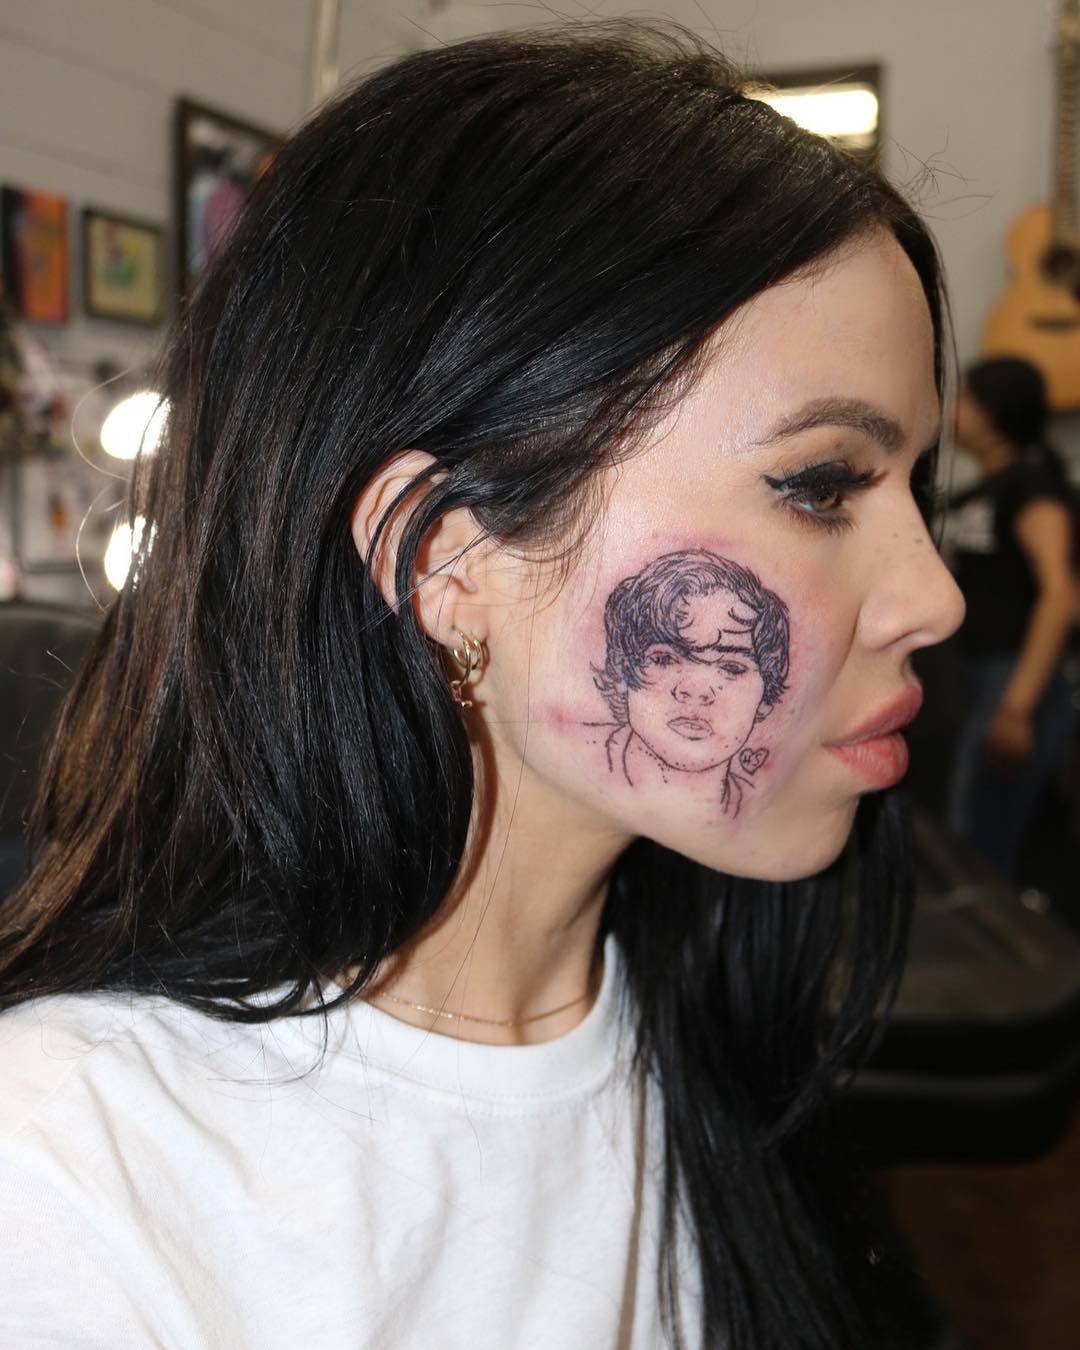 Rođendanski dar: Pjevačica na lice tetovirala Harryja Stylesa